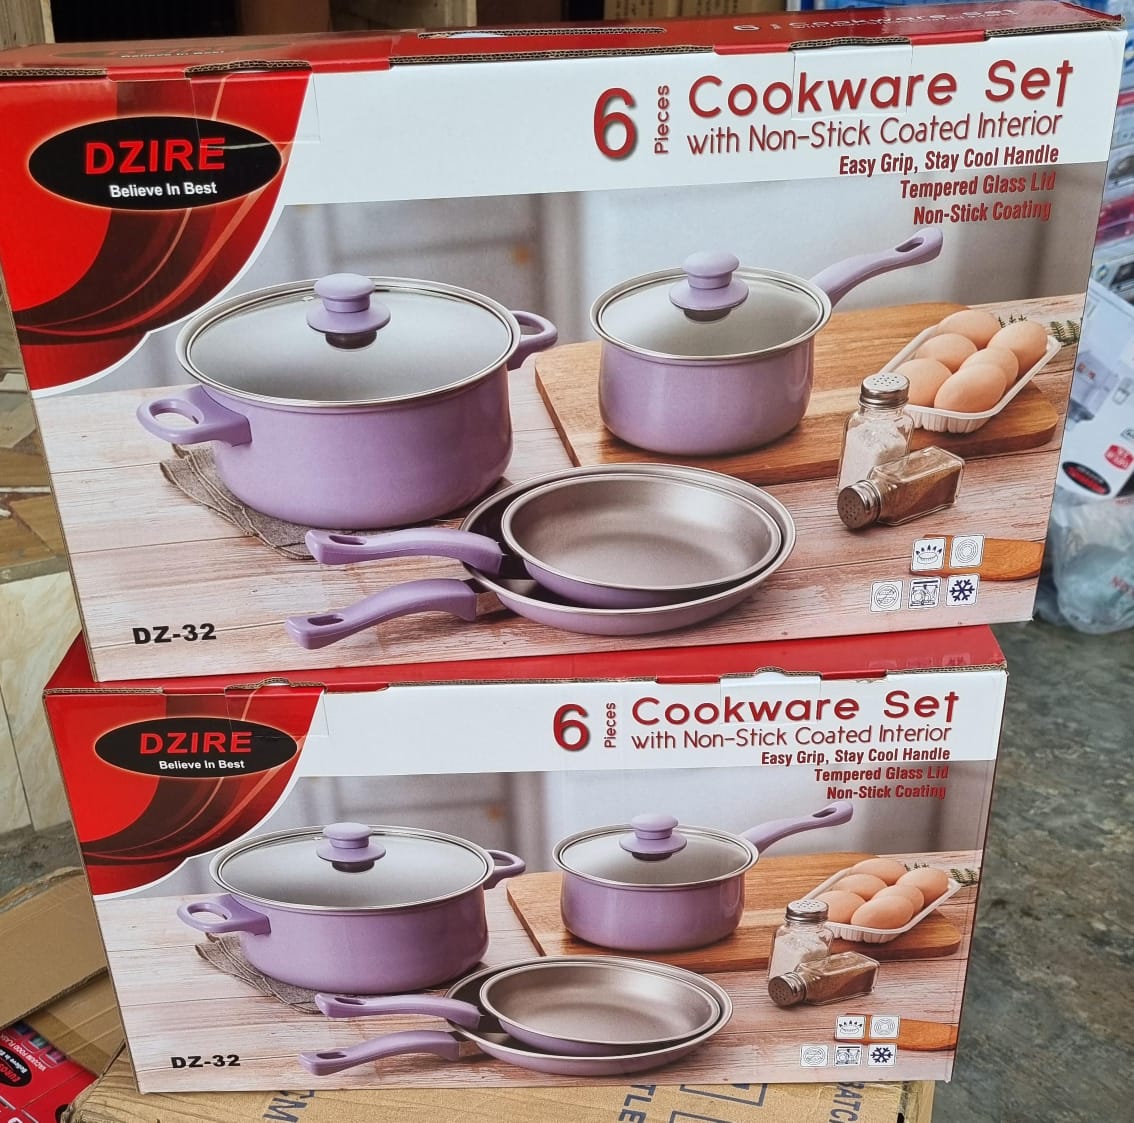 (DZ32) DZIRE 6pc Cookware Set